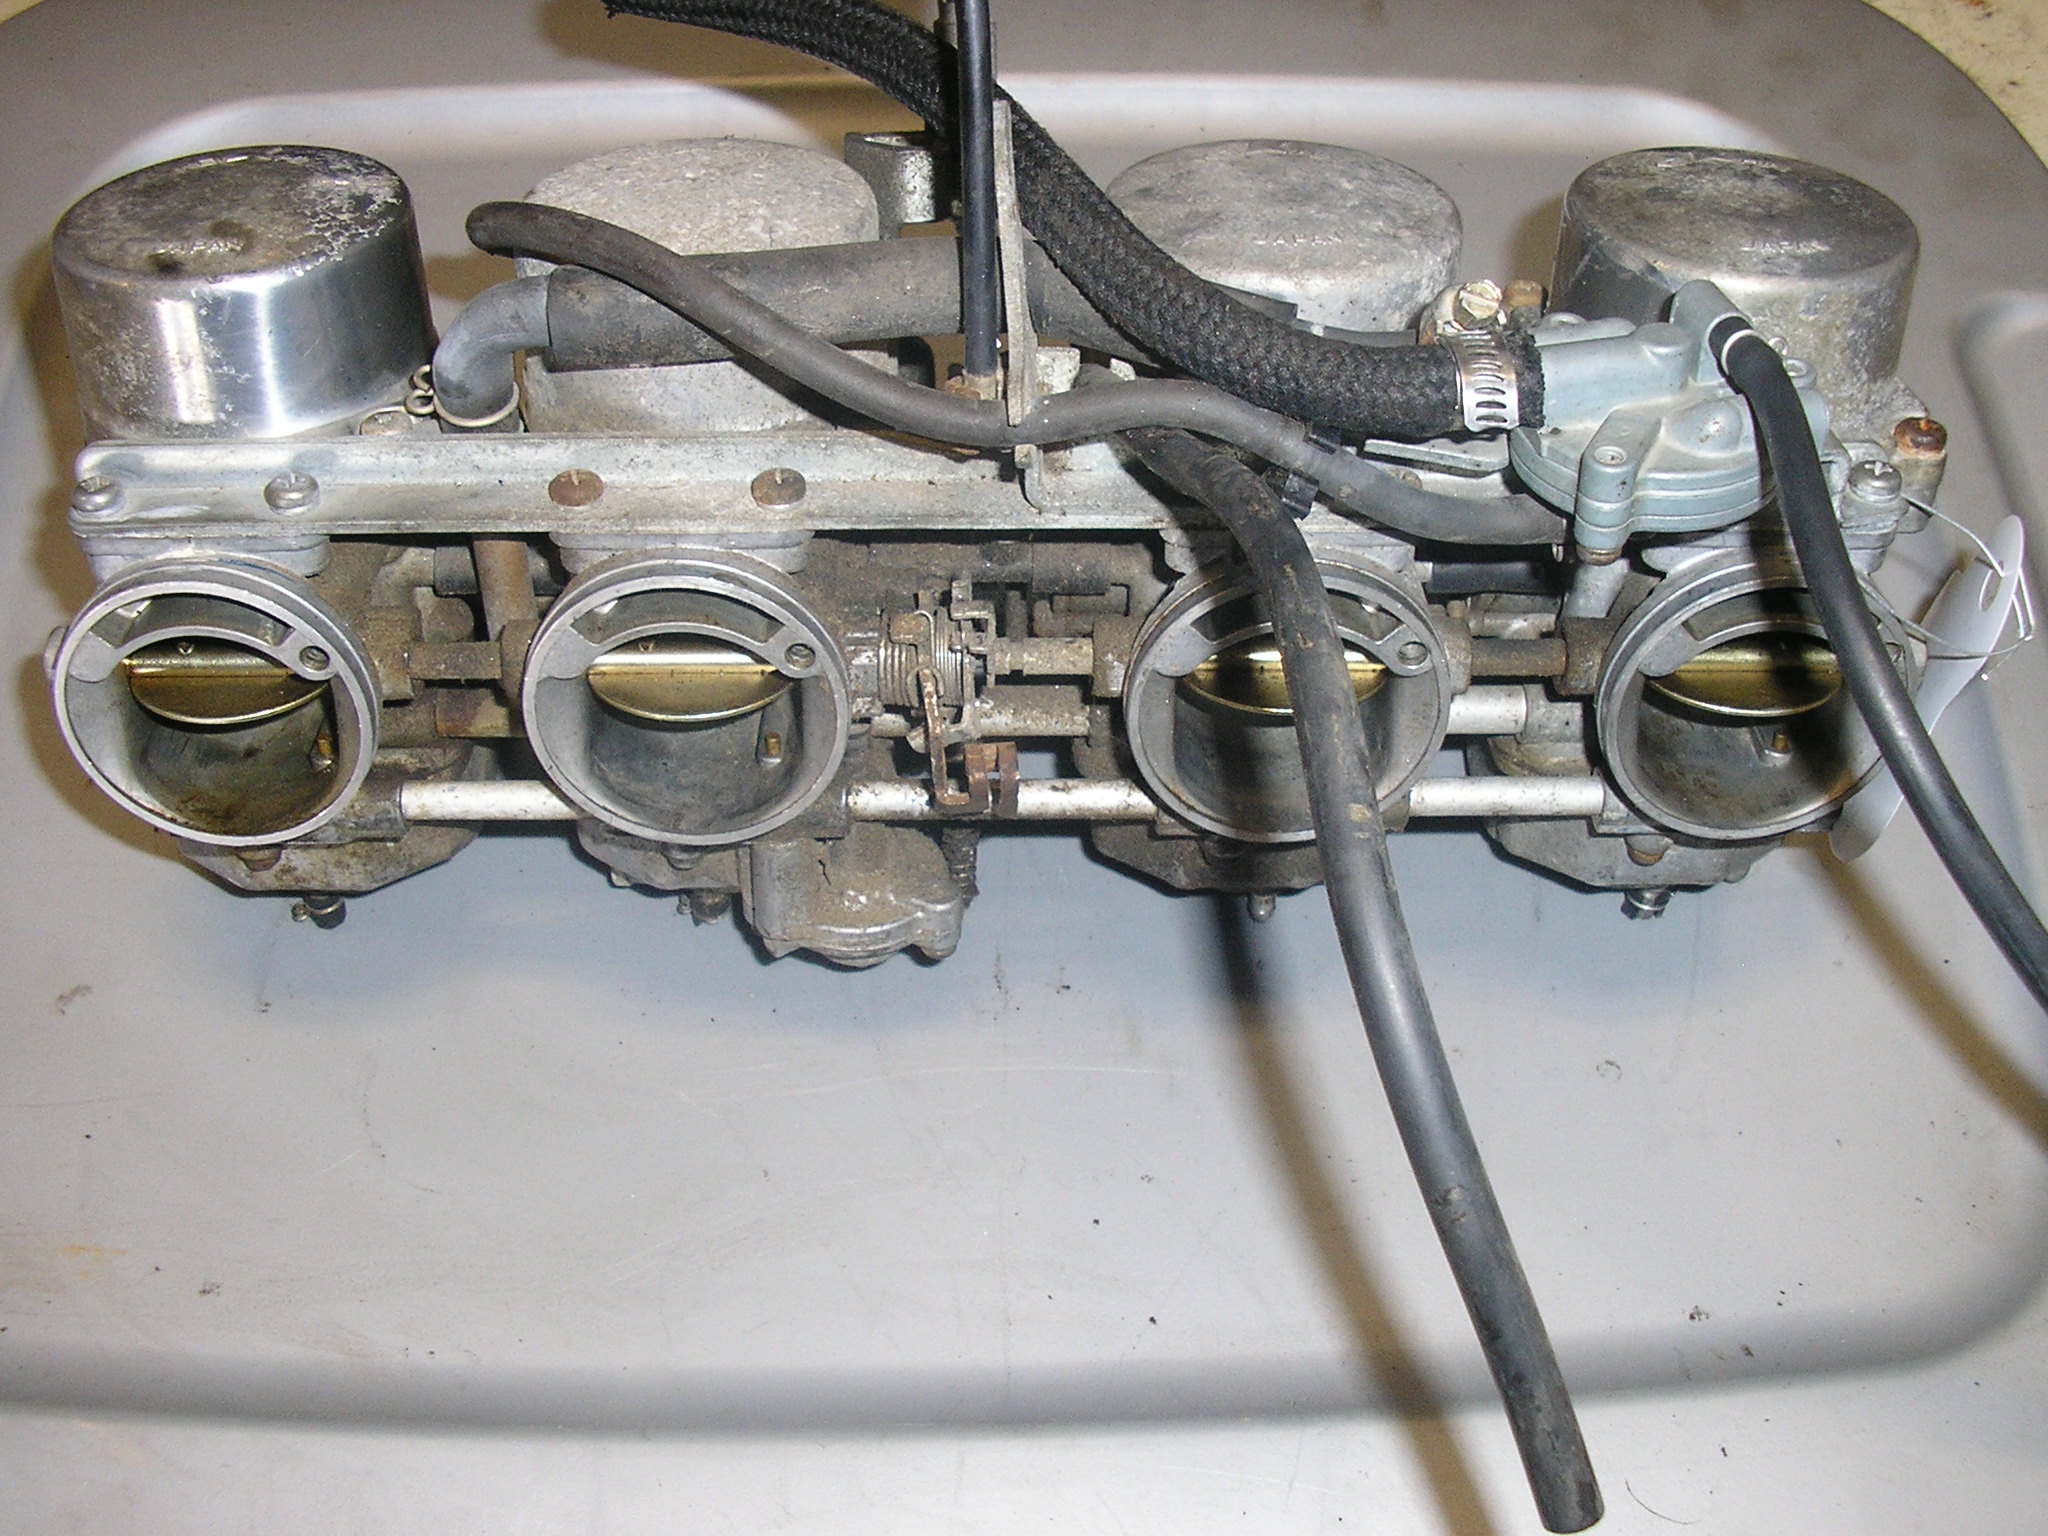 How to adjust honda motorcycle carburetor #4